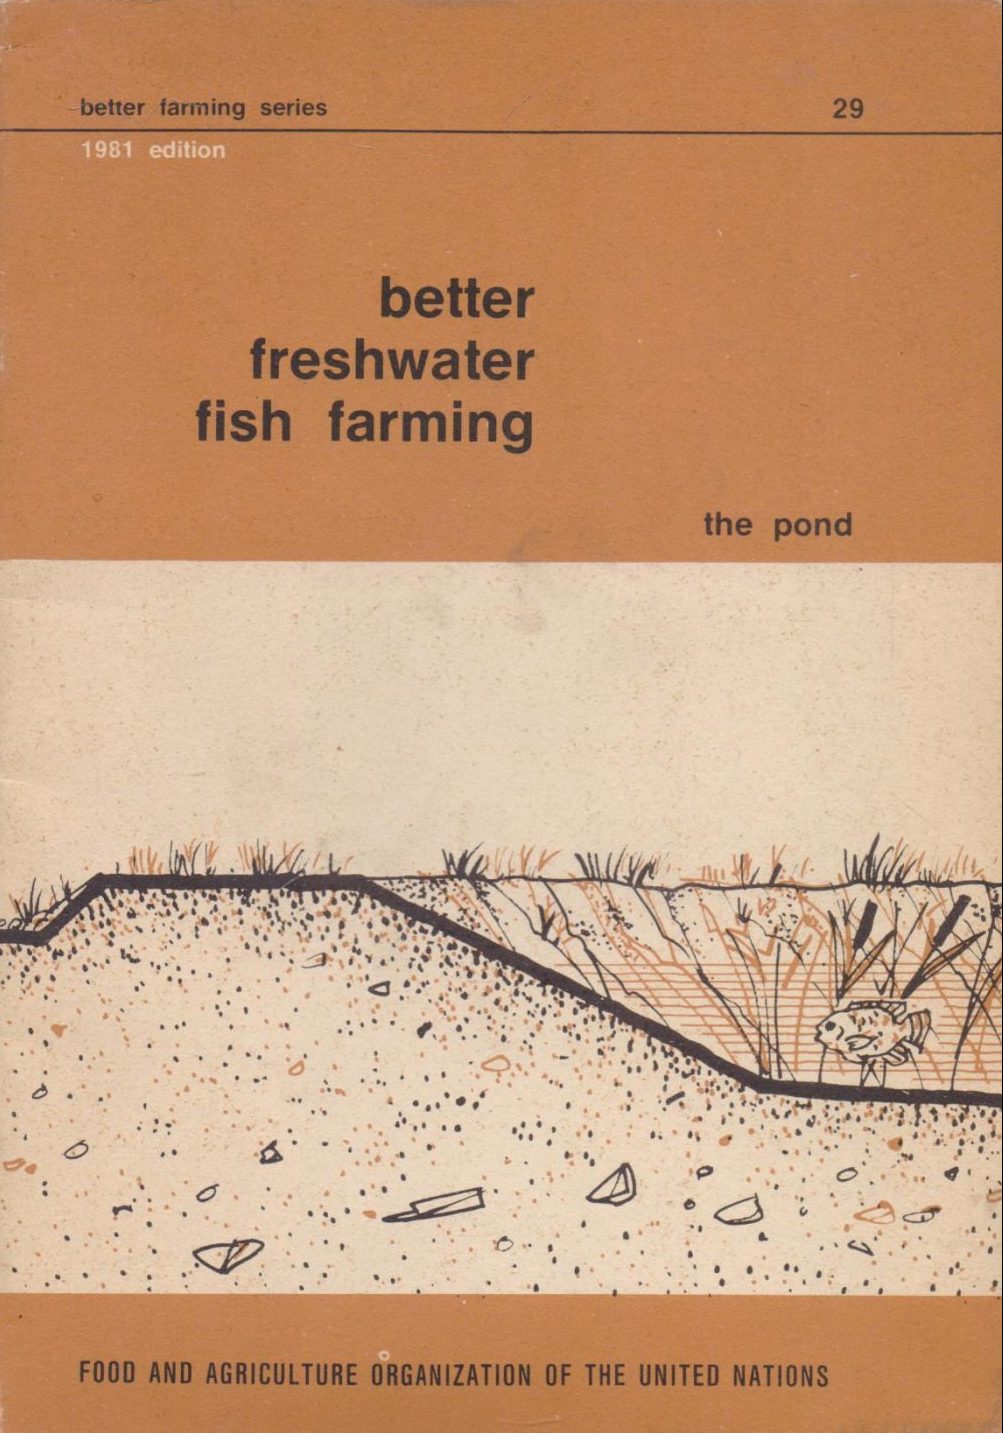 Better freshwater fish farming G.A.